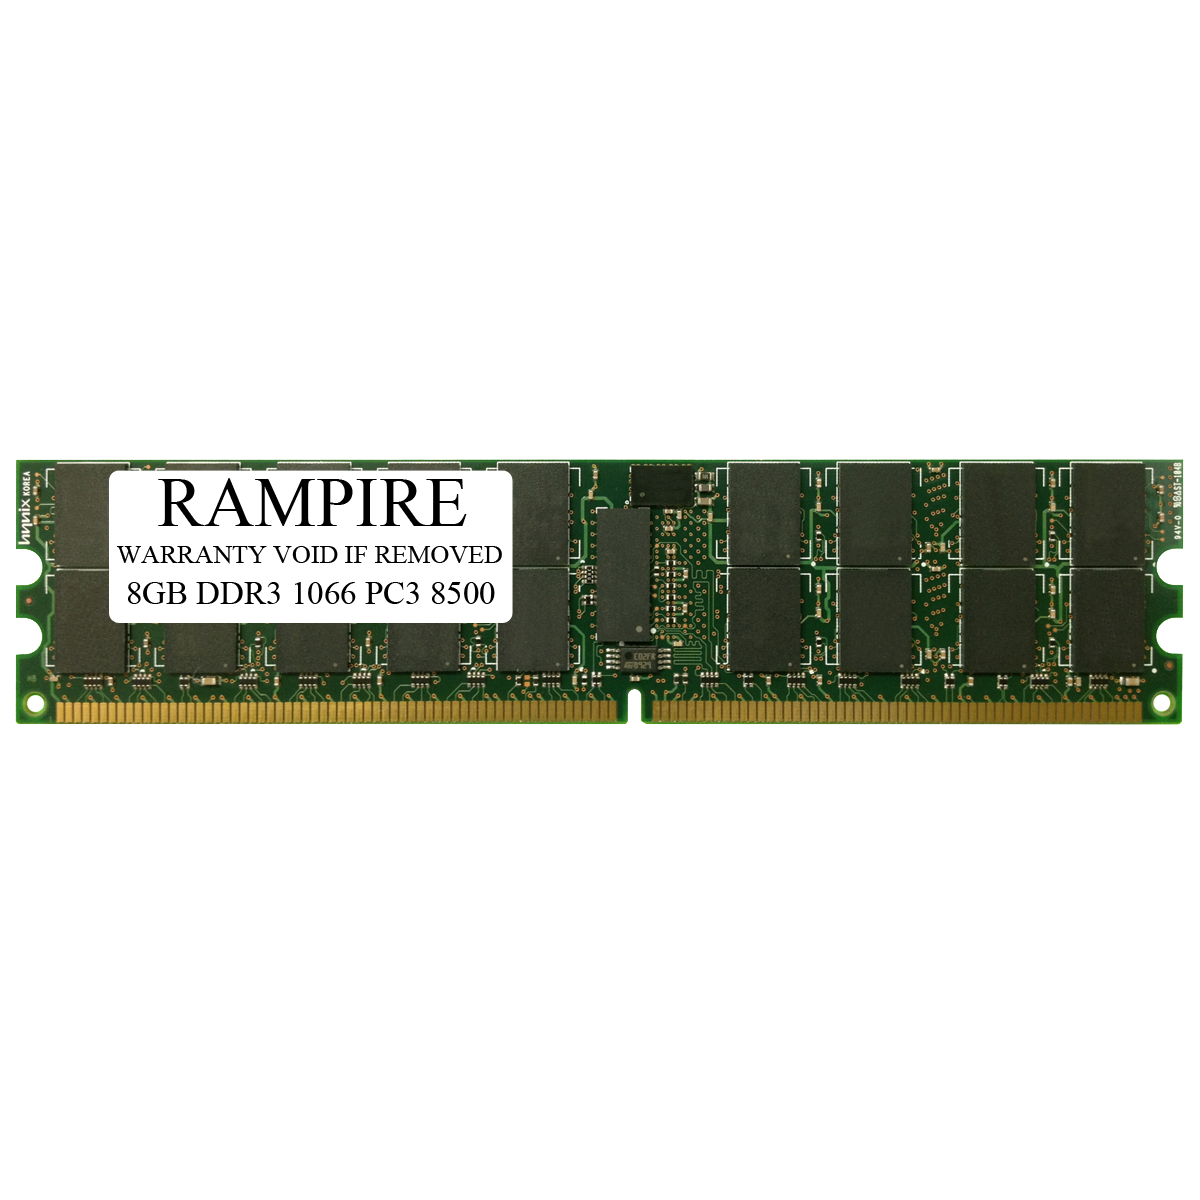 RAMPIRE 8GB DDR3 1066 (PC3 8500) 240-Pin SDRAM 4Rx4 Standard Profile 1.5V ECC Registered Server Memory